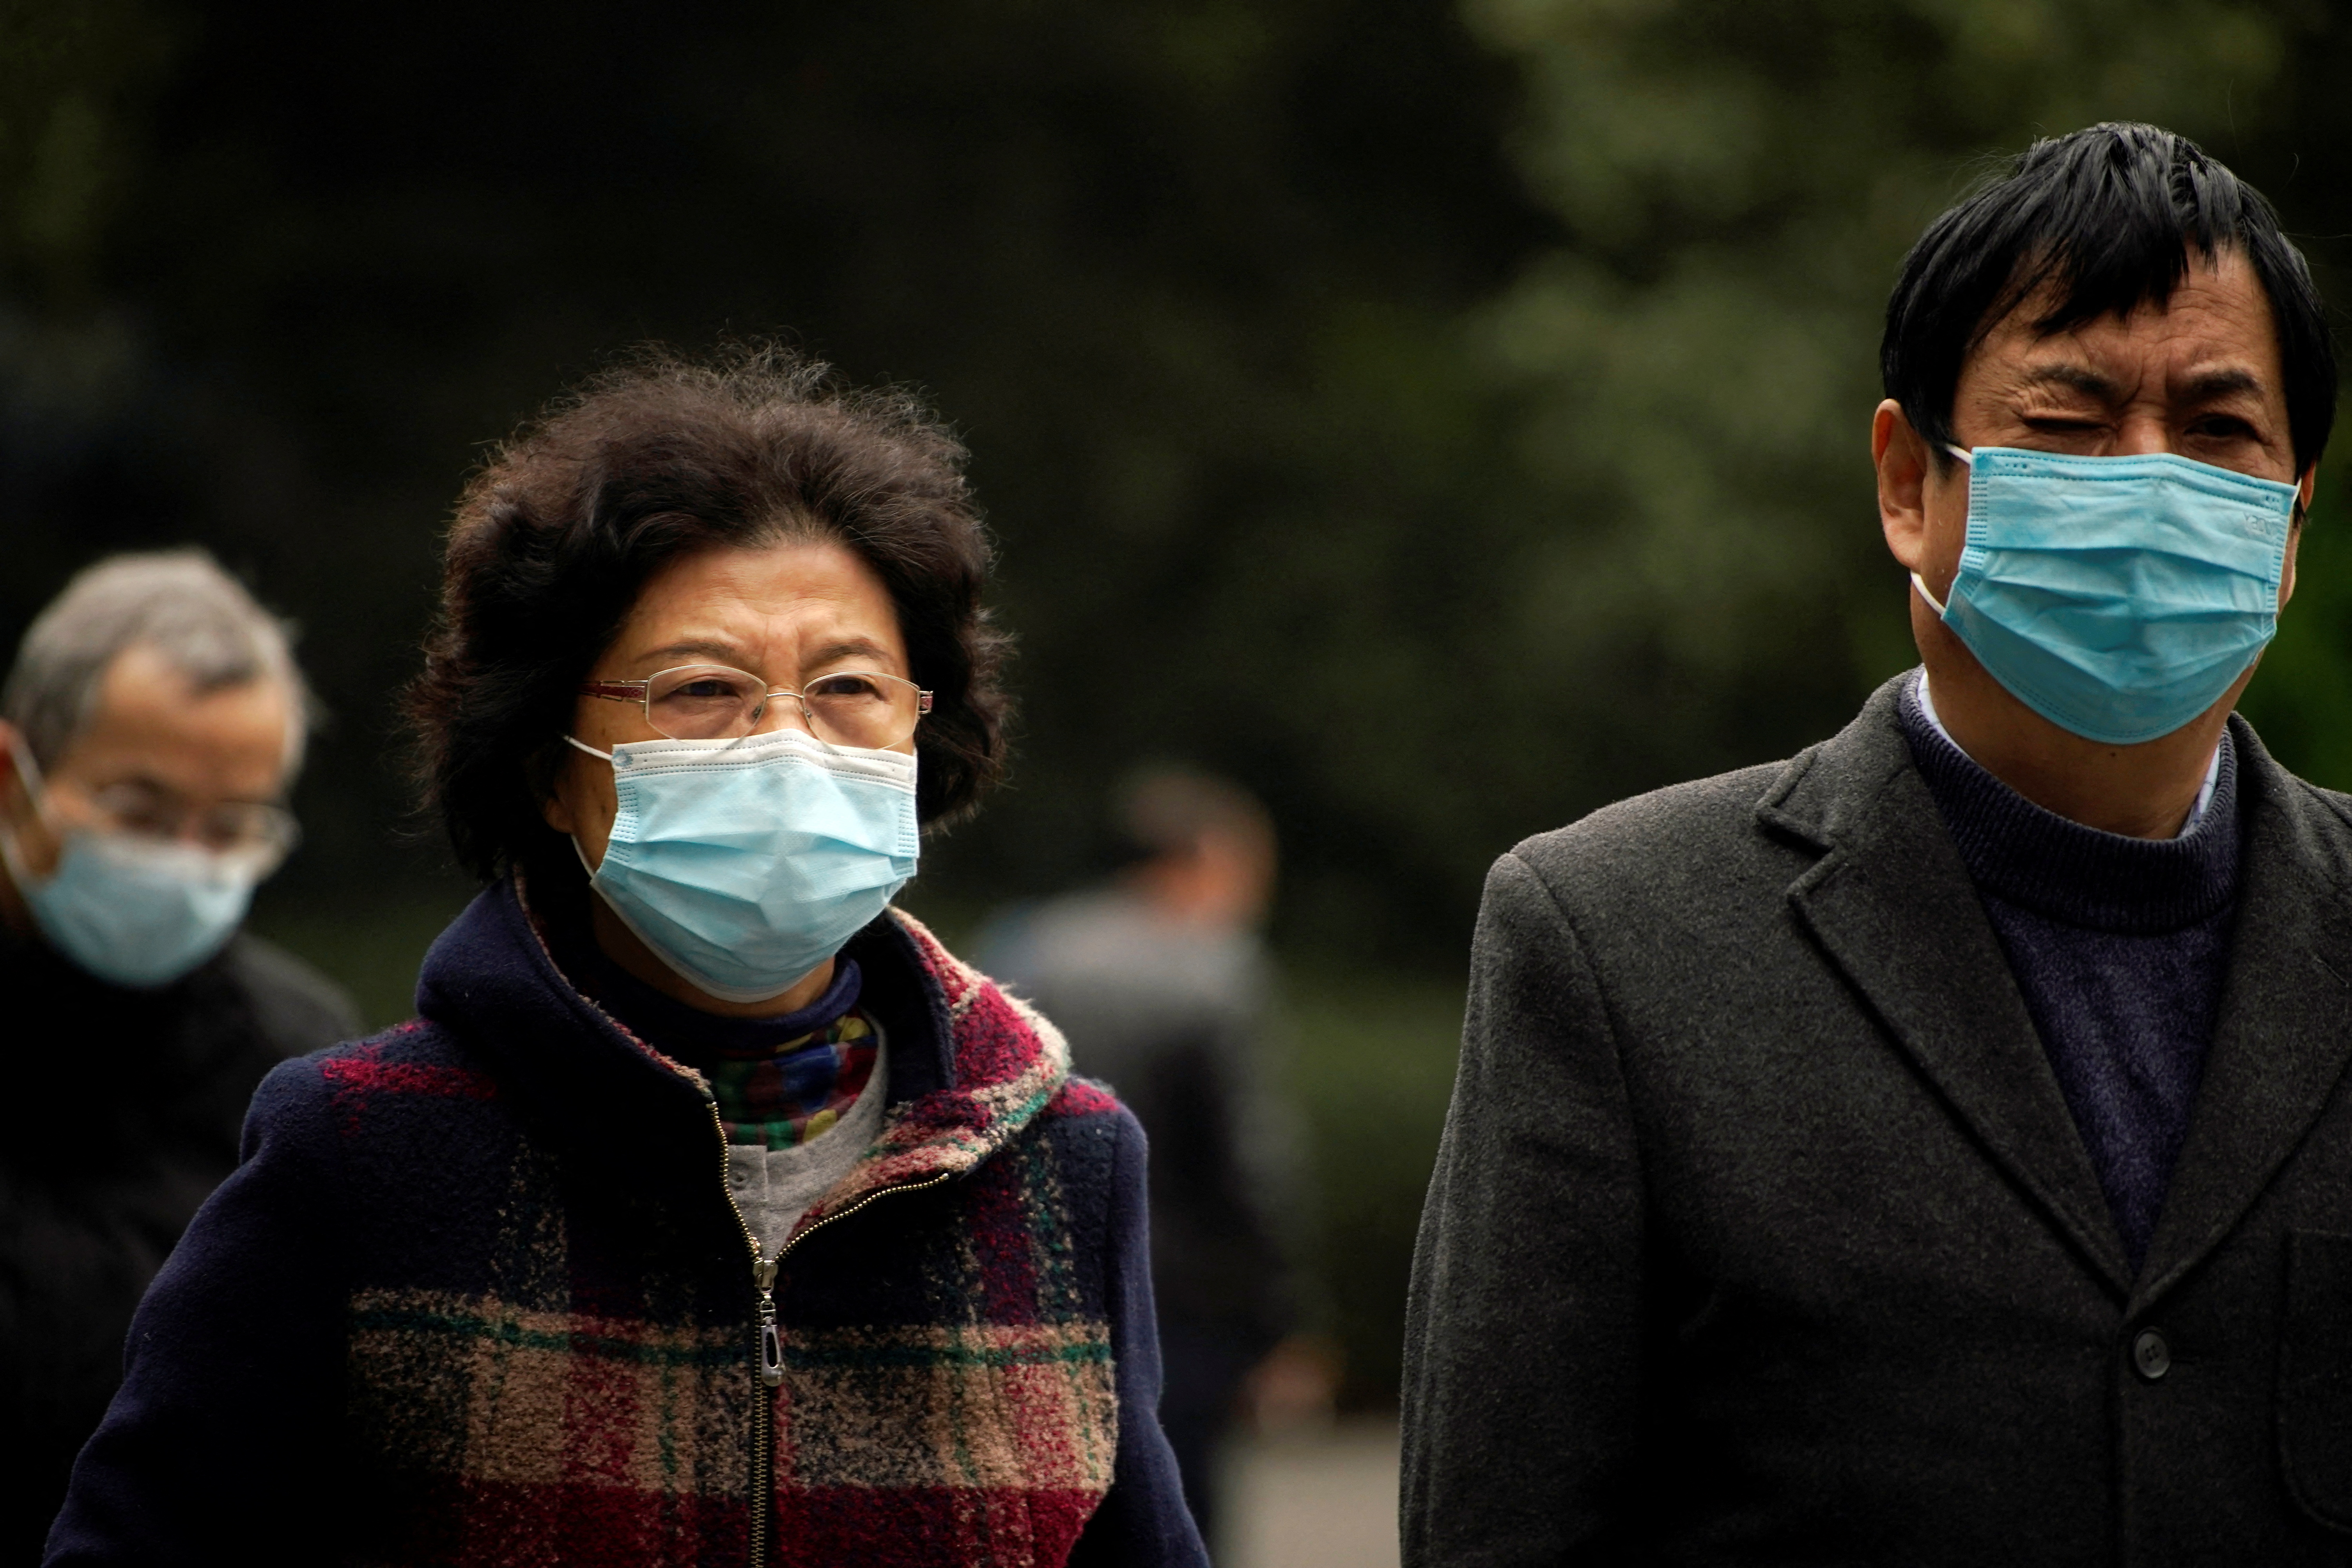 People wearing face masks following the COVID-19 outbreak walk on a street in Shanghai